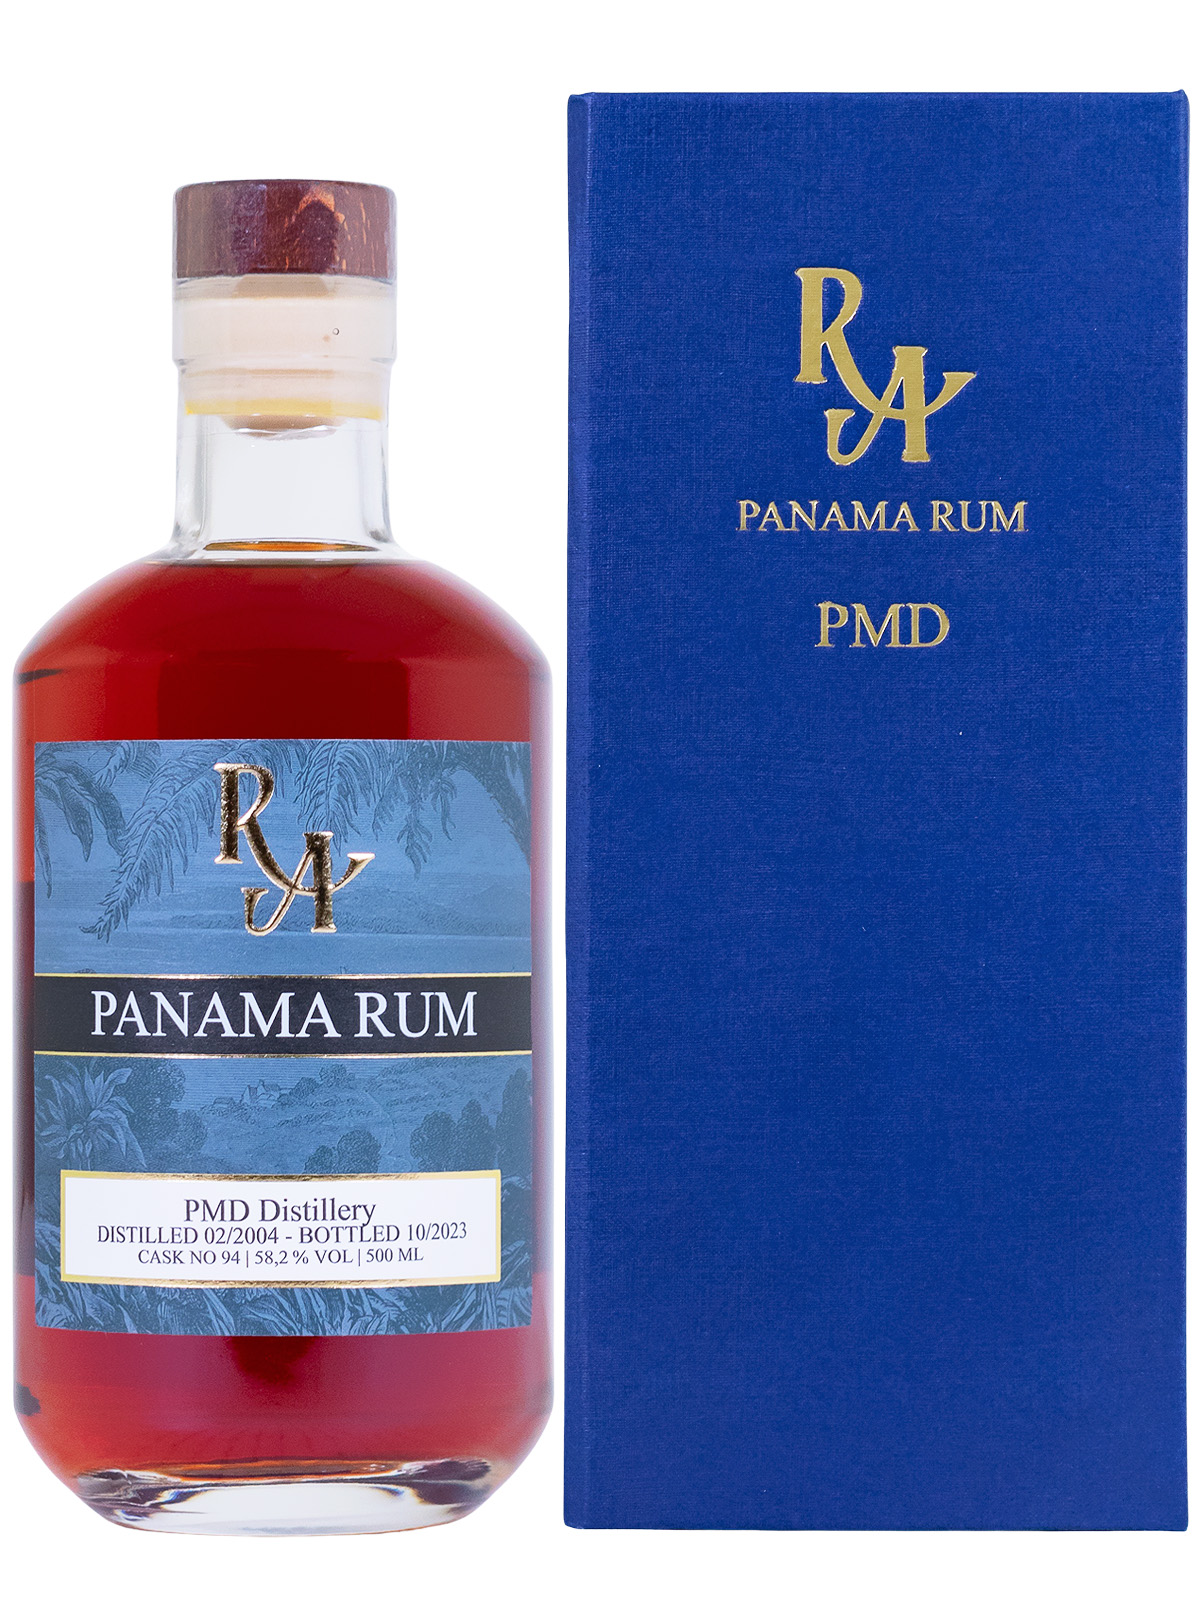 Rum Artesanal Panama 2004 - 0,5L 58,2% vol